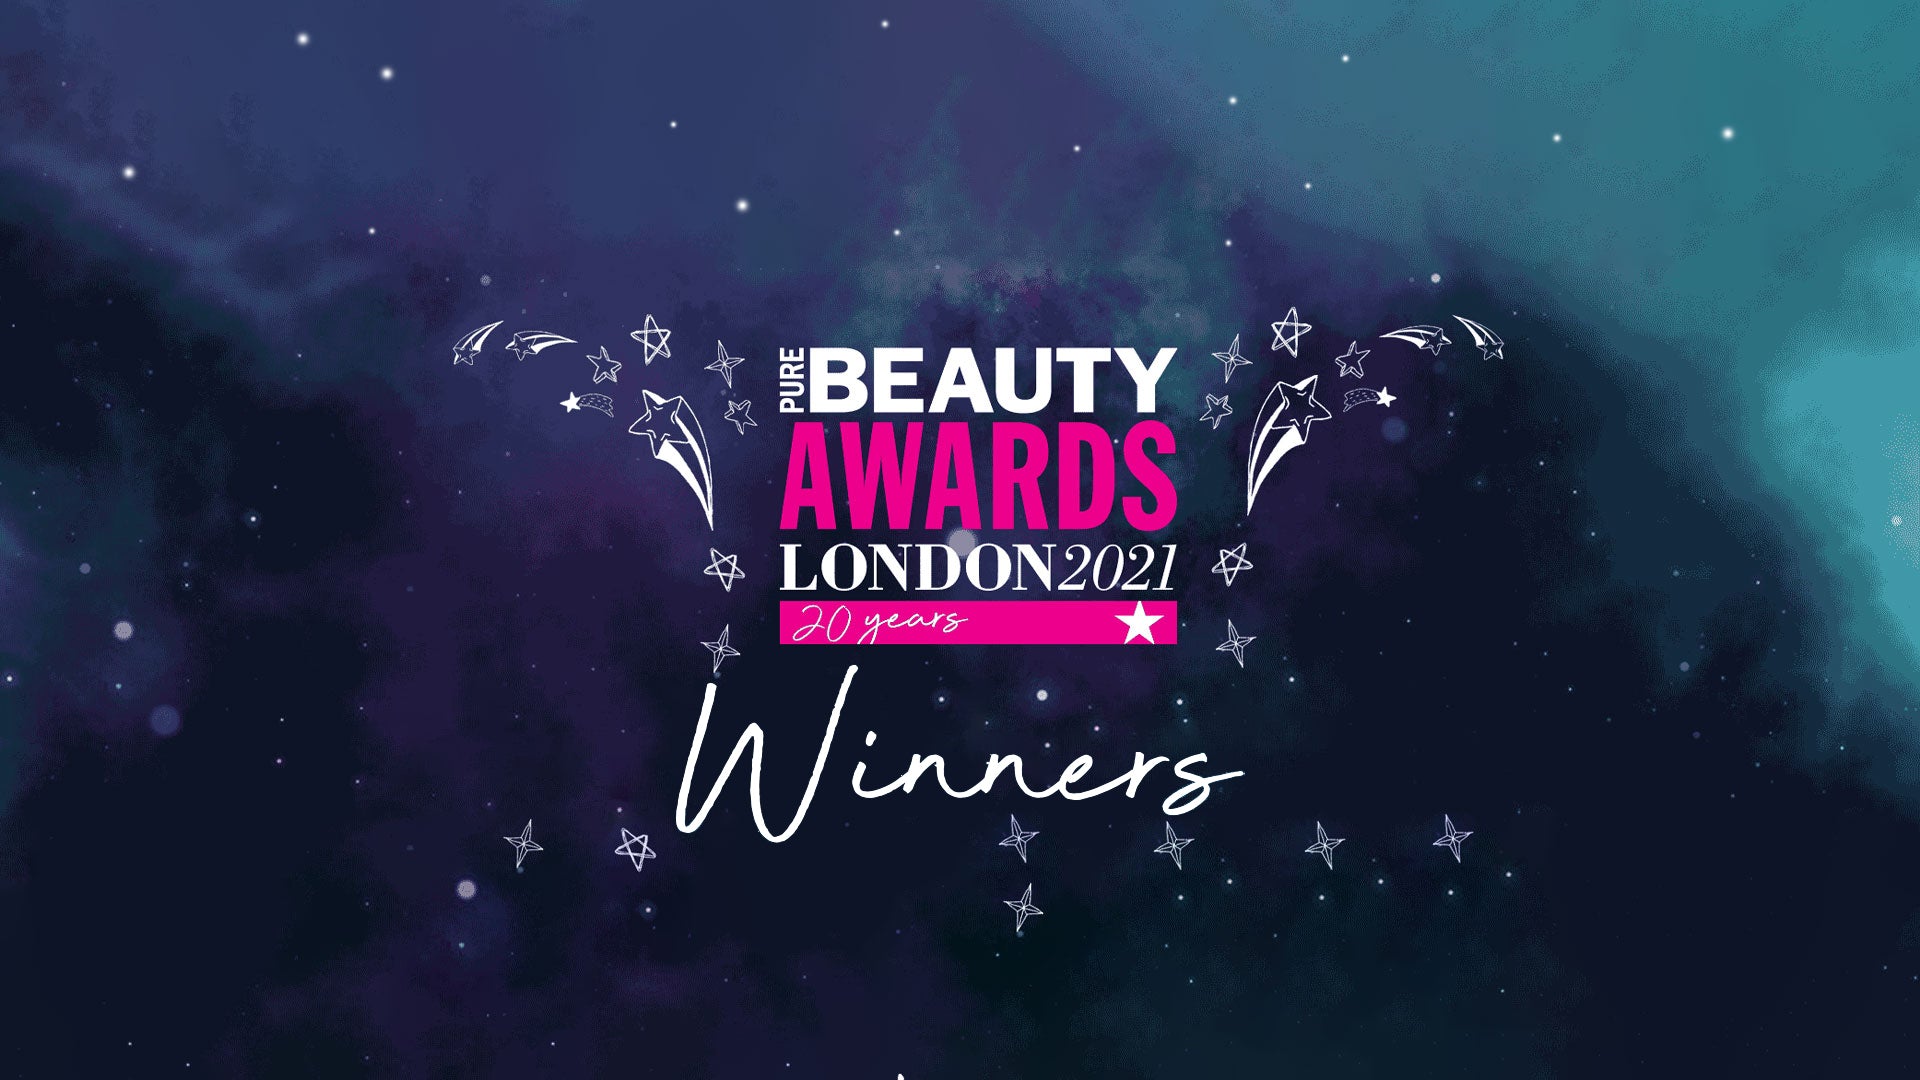 Pure Beauty Awards London 2021 - Shedid & Parrish Win Gold & Silver!